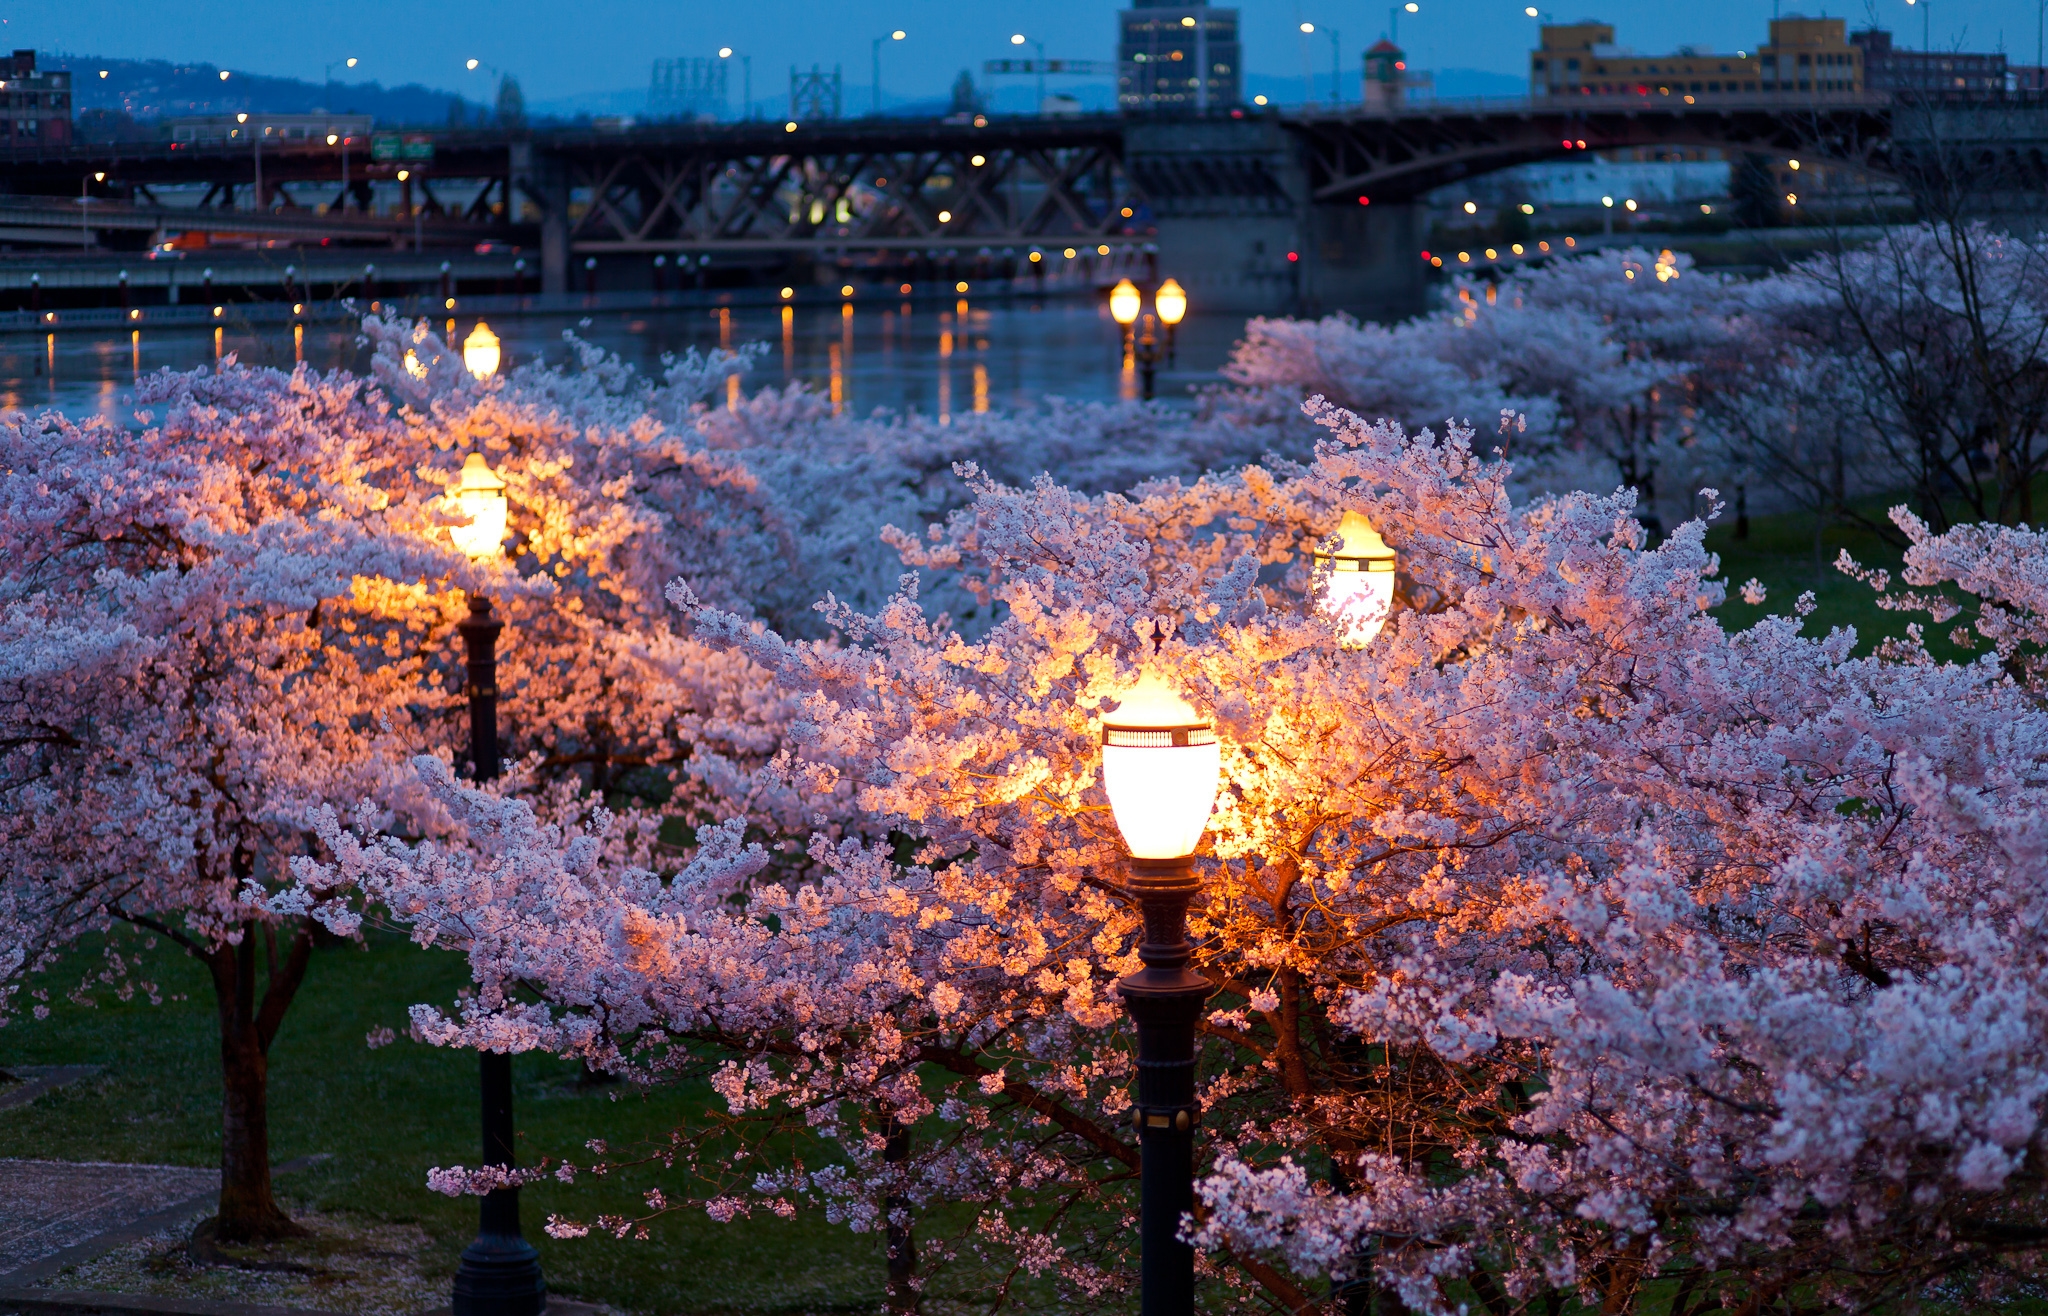 bloom, evening, cities, rivers, bridges, trees, night, city, lights, park, lanterns, color, spring cellphone